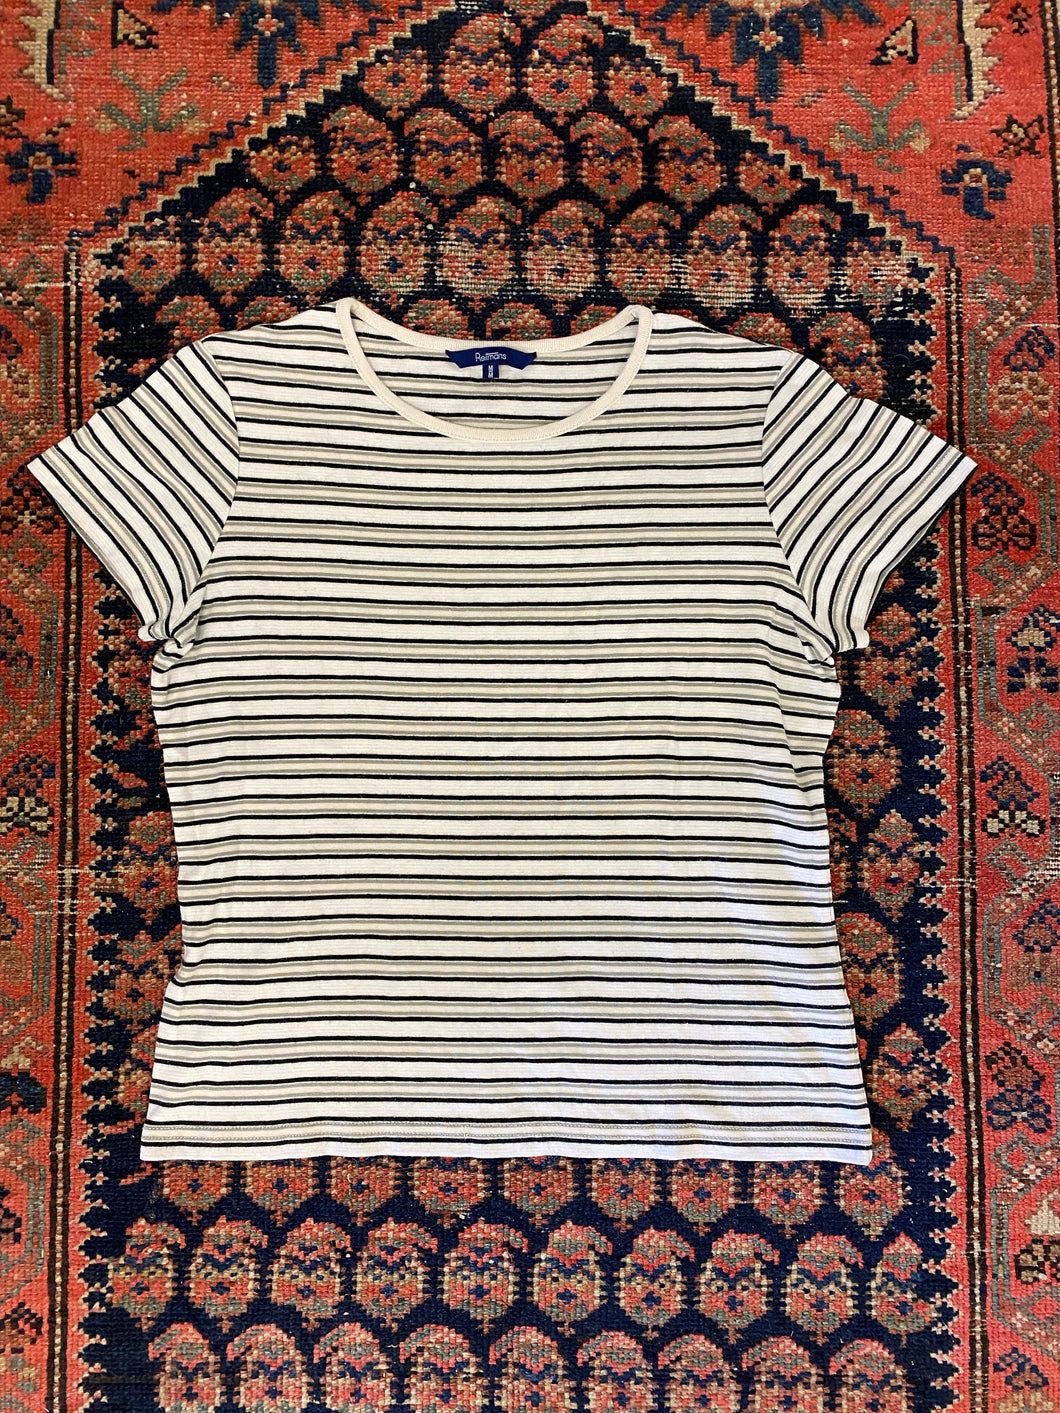 Vintage Striped T Shirt - M